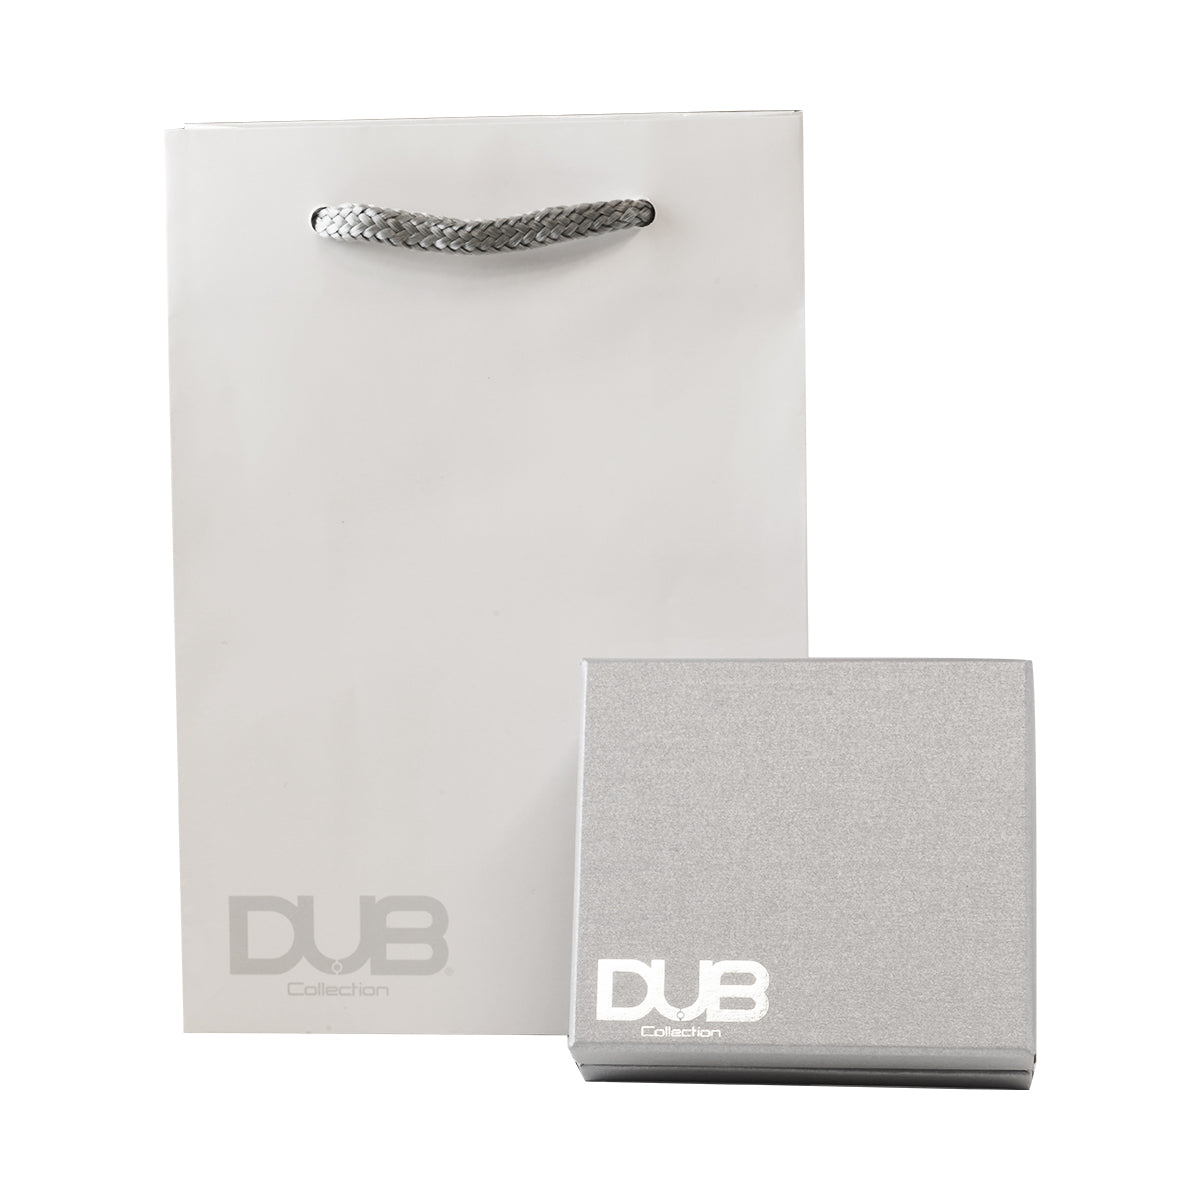 DUBj-180-1 Side Emblem Stone Necklace -black-